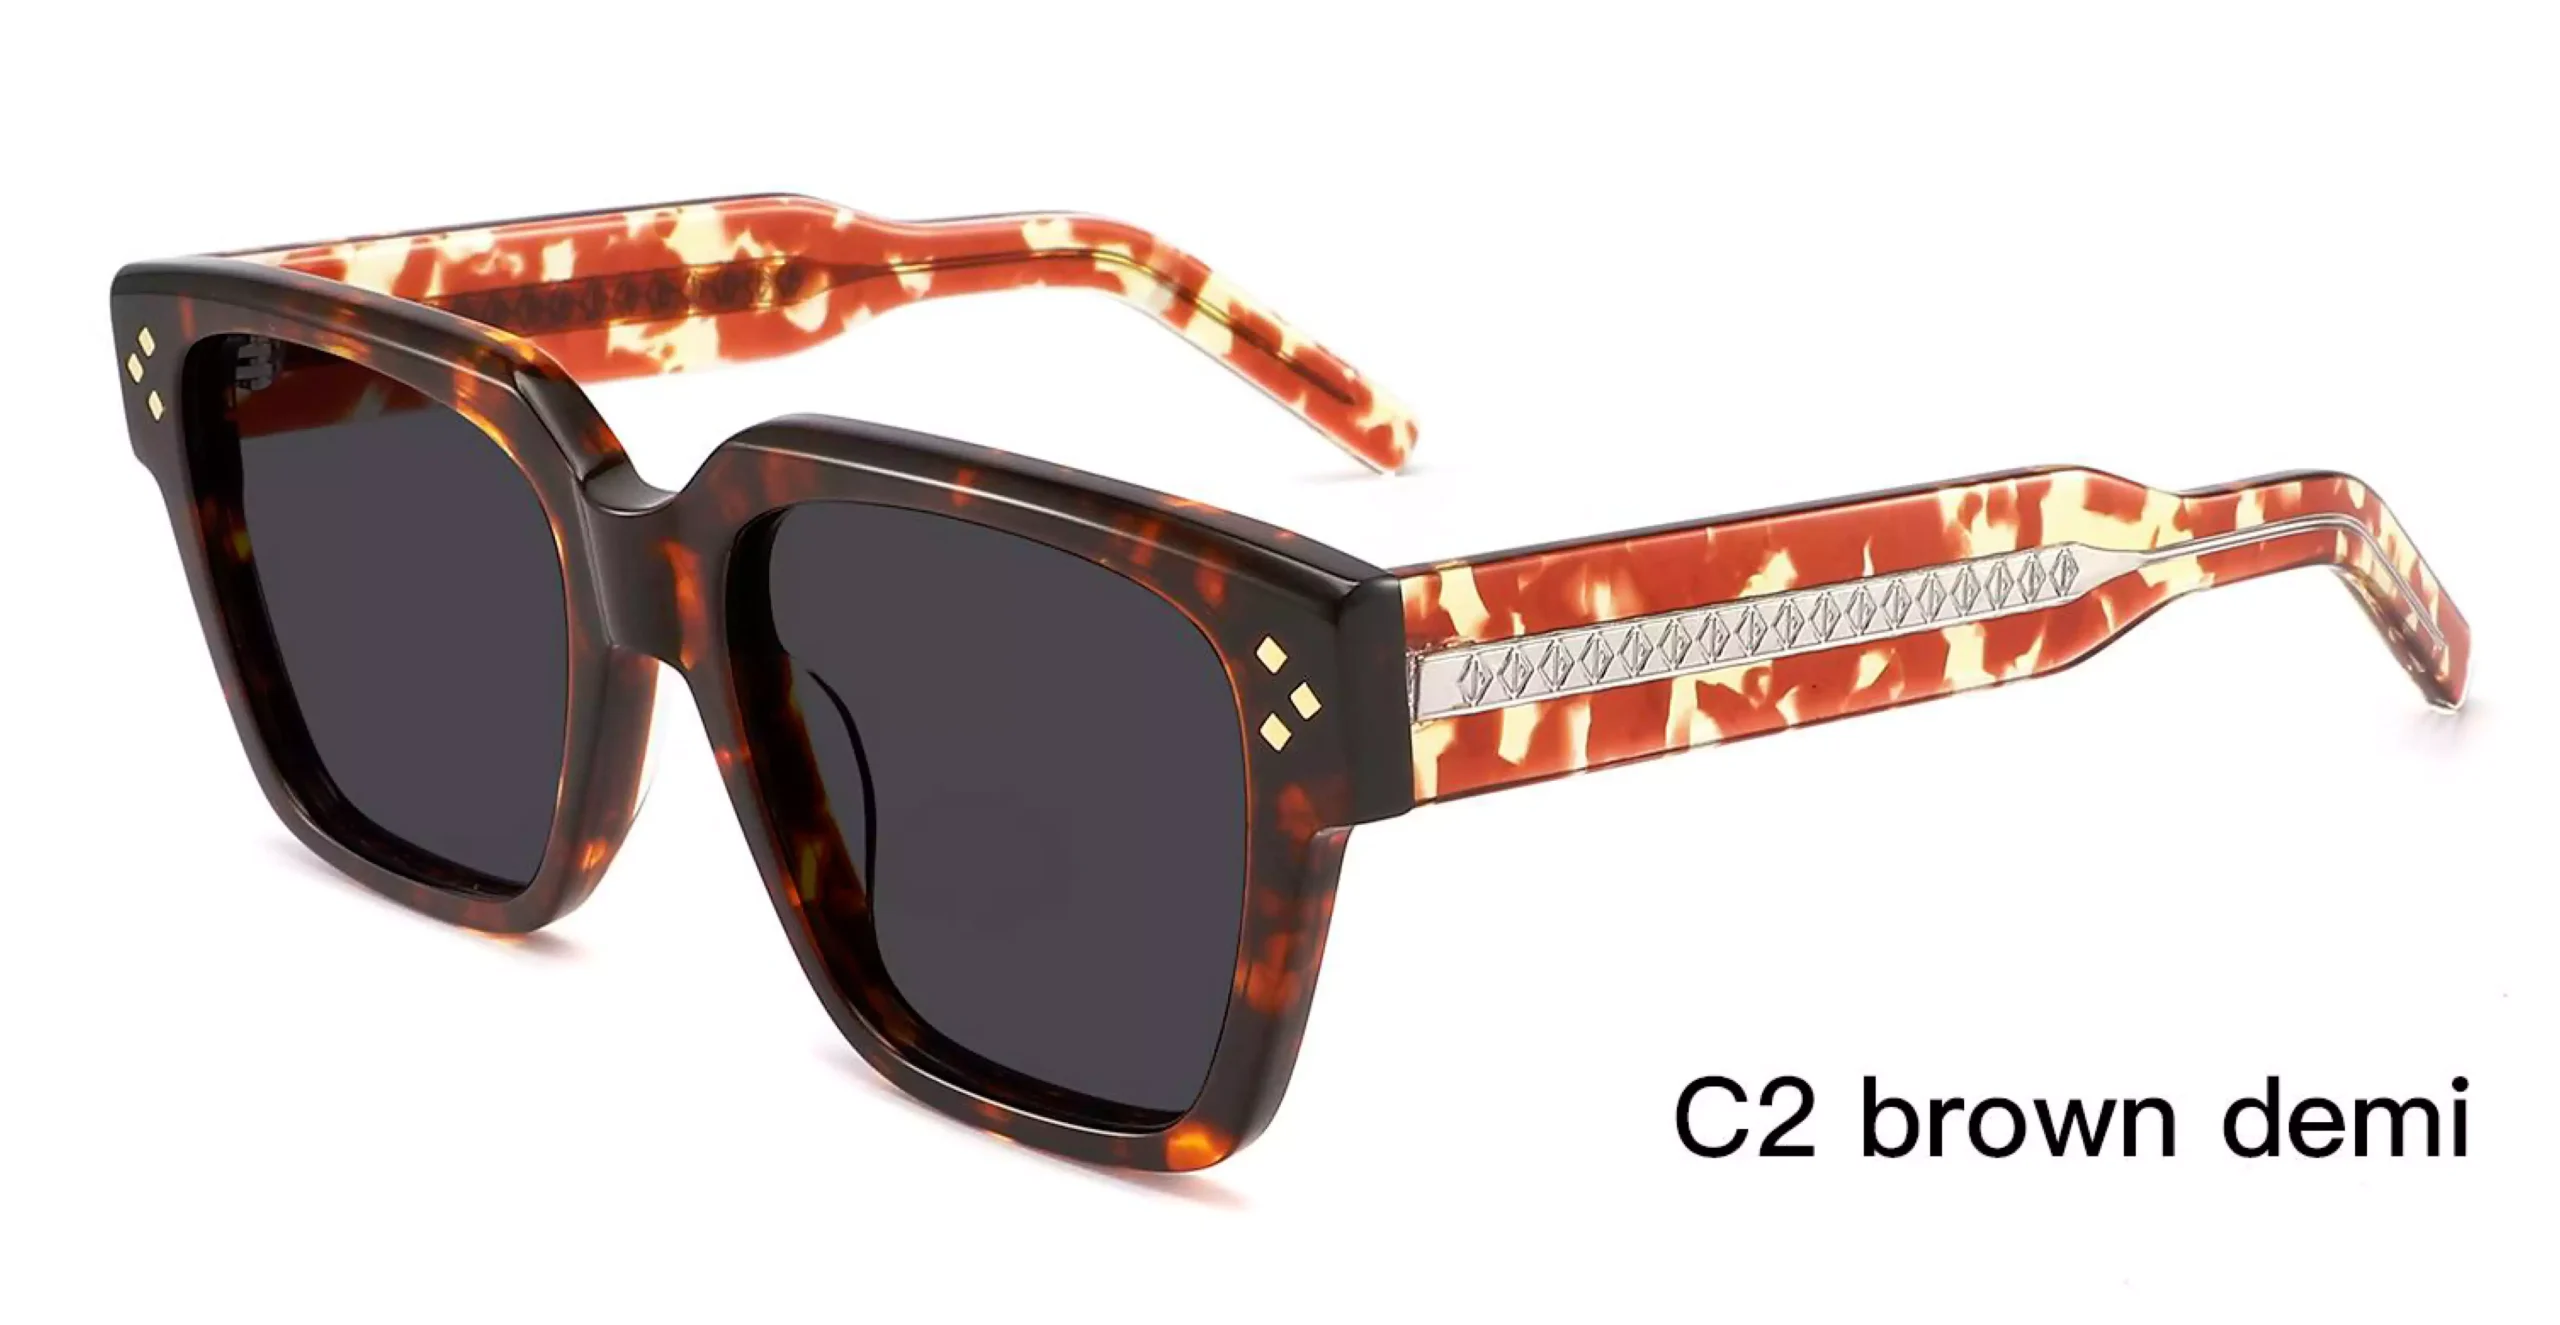 Wholesale Sunglasses Suppliers, Brown Demi, tortoise, UV protection sunglasses, laser engraved wire cores, acetate sunglasses, rivets